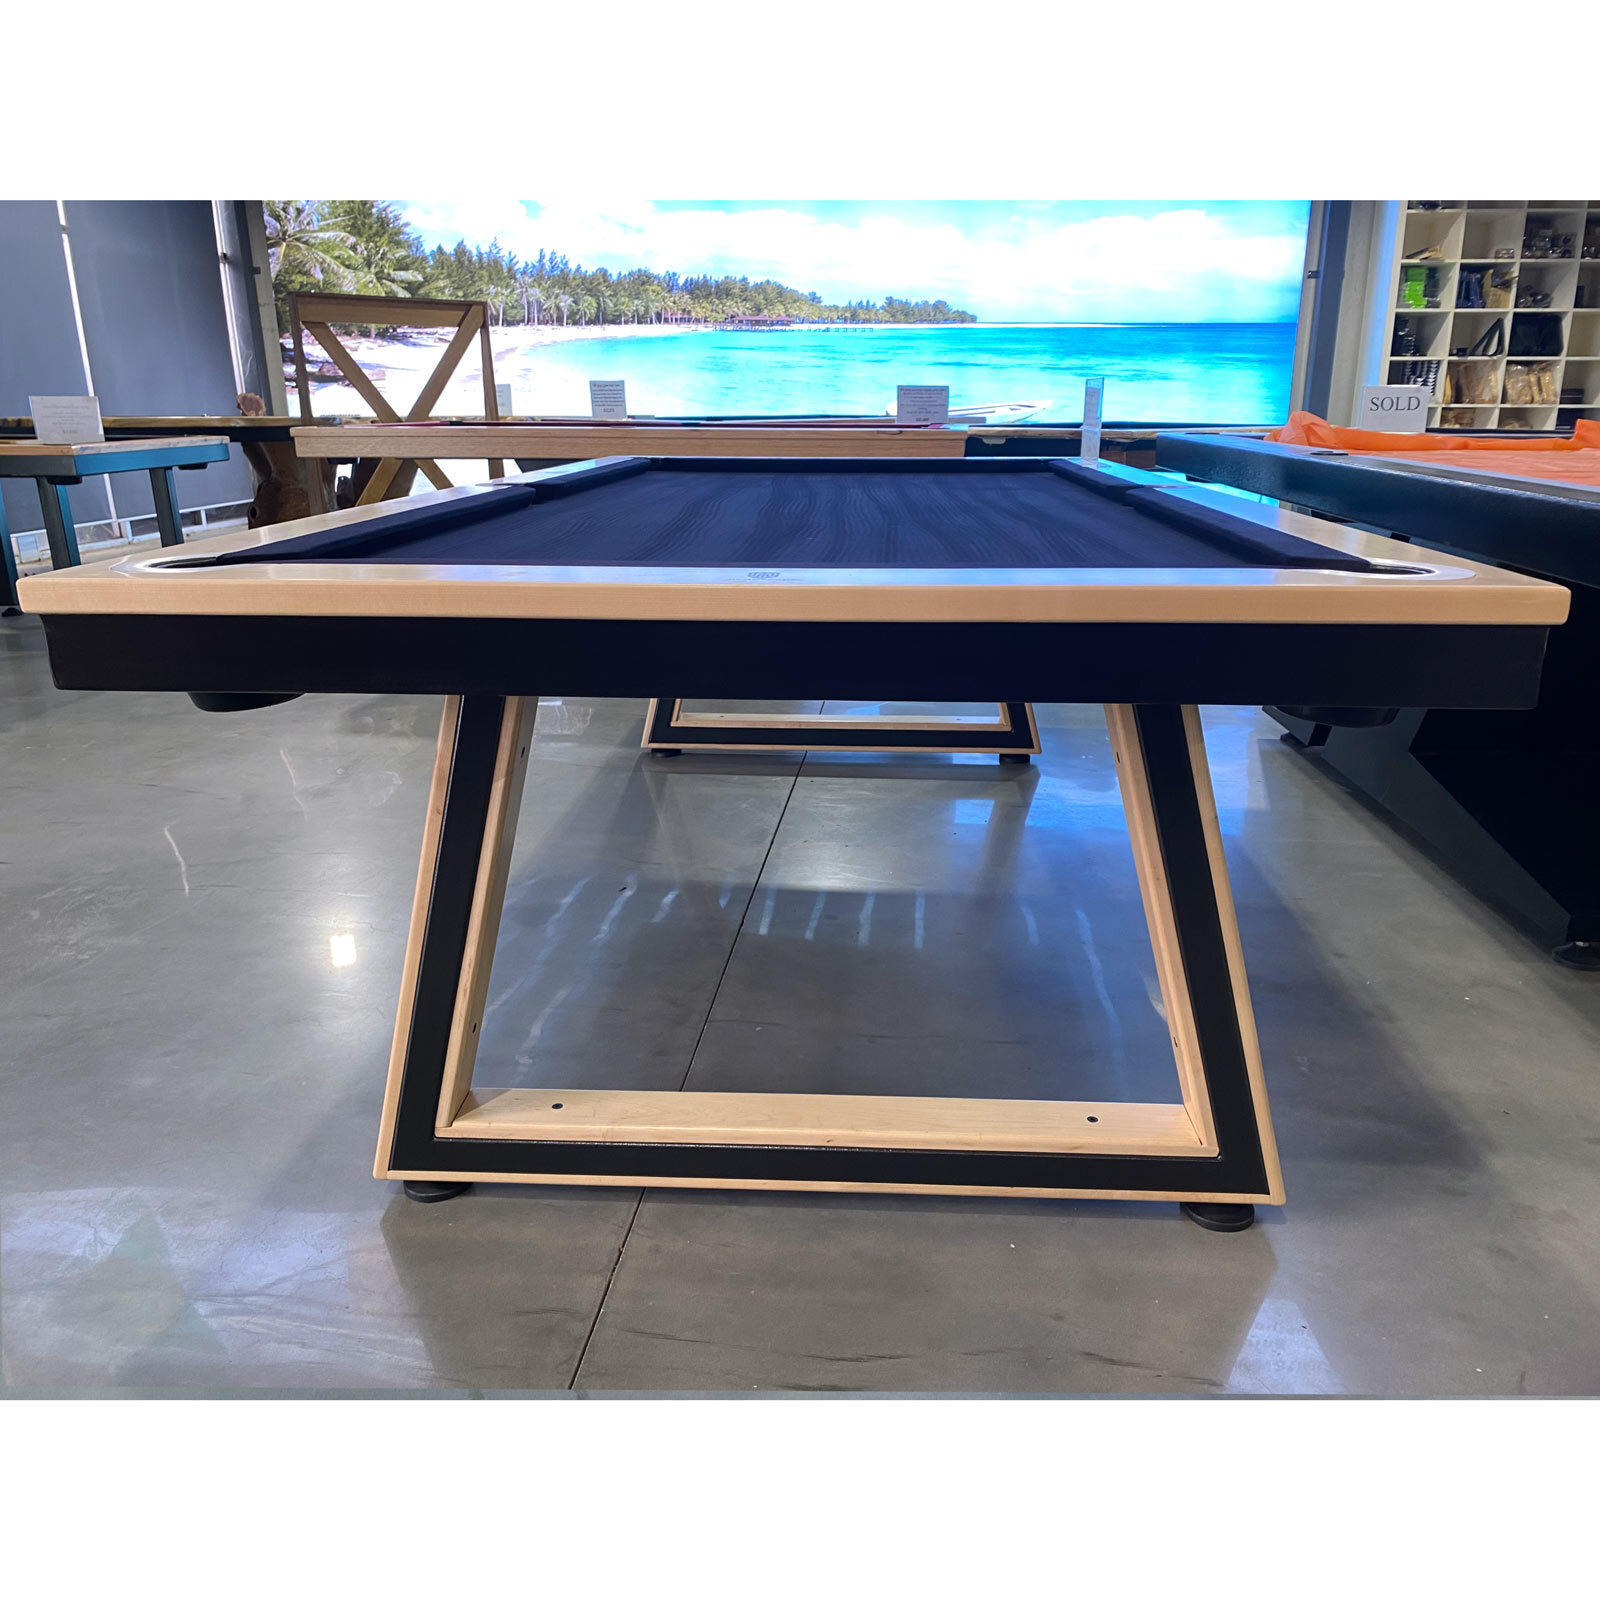 Pre-made 8 foot Slate SAGA Pool Billiards Table, Canadian Maple Timber